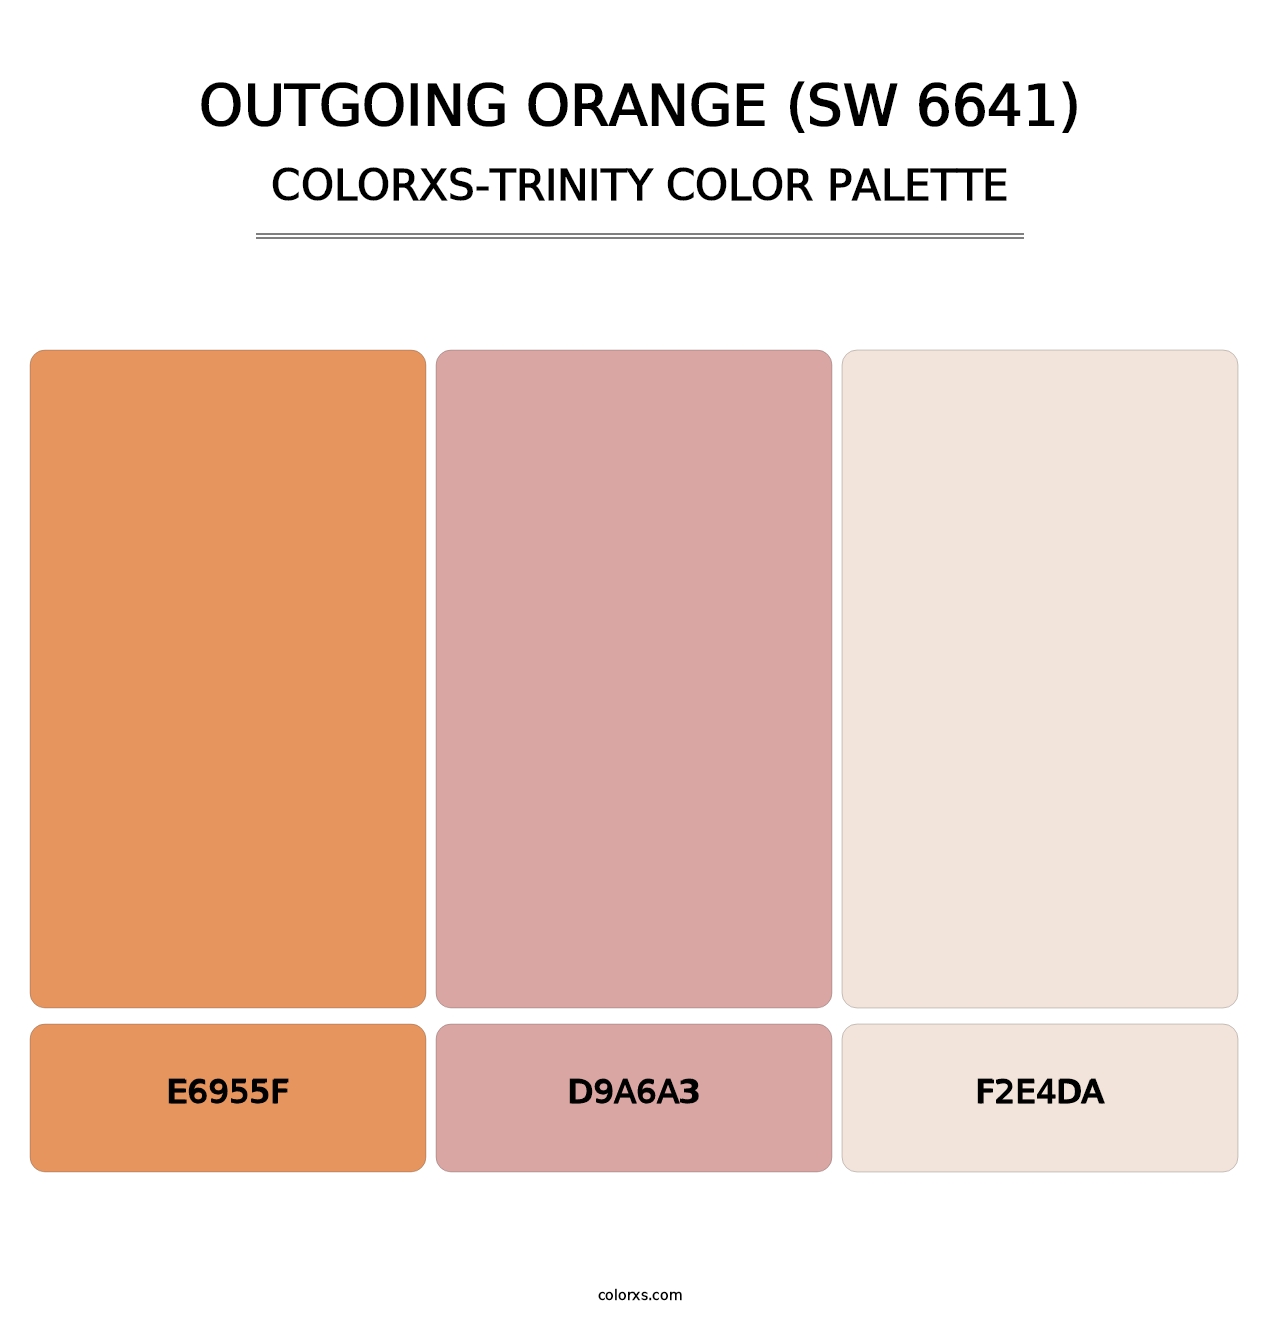 Outgoing Orange (SW 6641) - Colorxs Trinity Palette